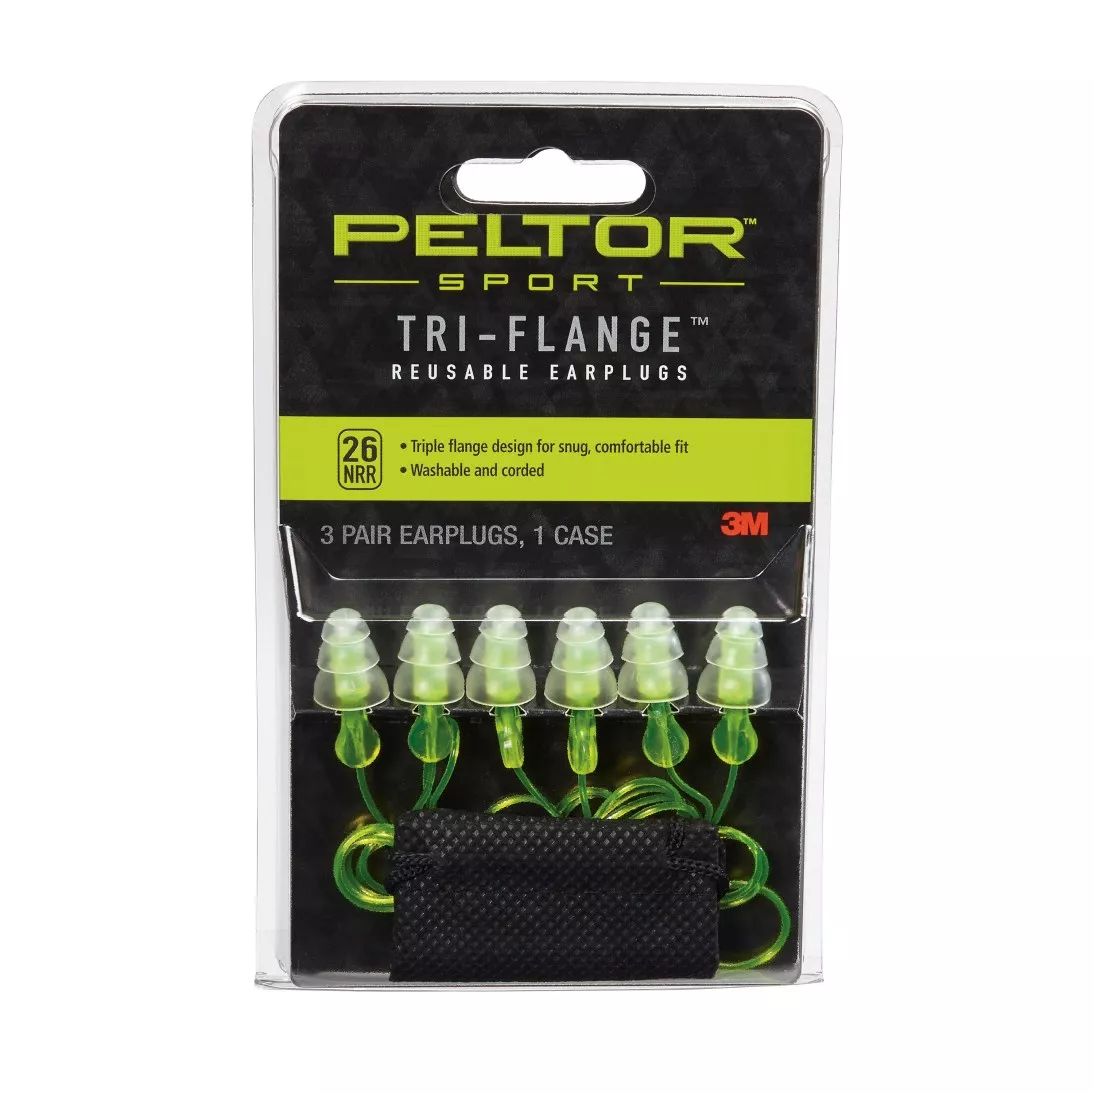 Peltor™ Sport Tri-Flange™ Corded Reusable Earplugs 97317-10C, 3 Pair
Pack Neon Yellow